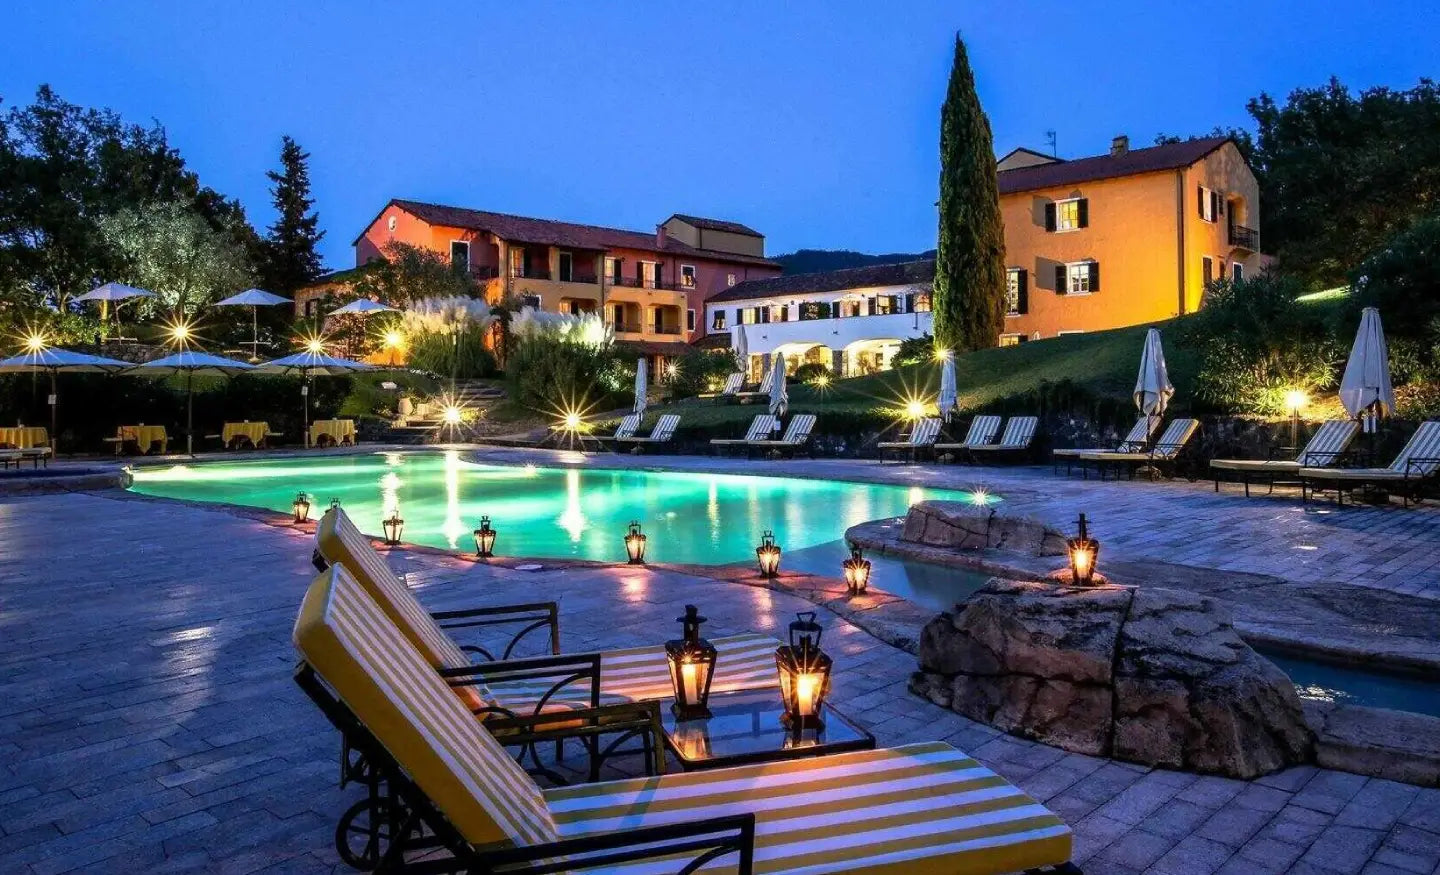 Eleganza raffinata: La Meridiana Hotel & Golf Resort illumina la Riviera Ligure con stile